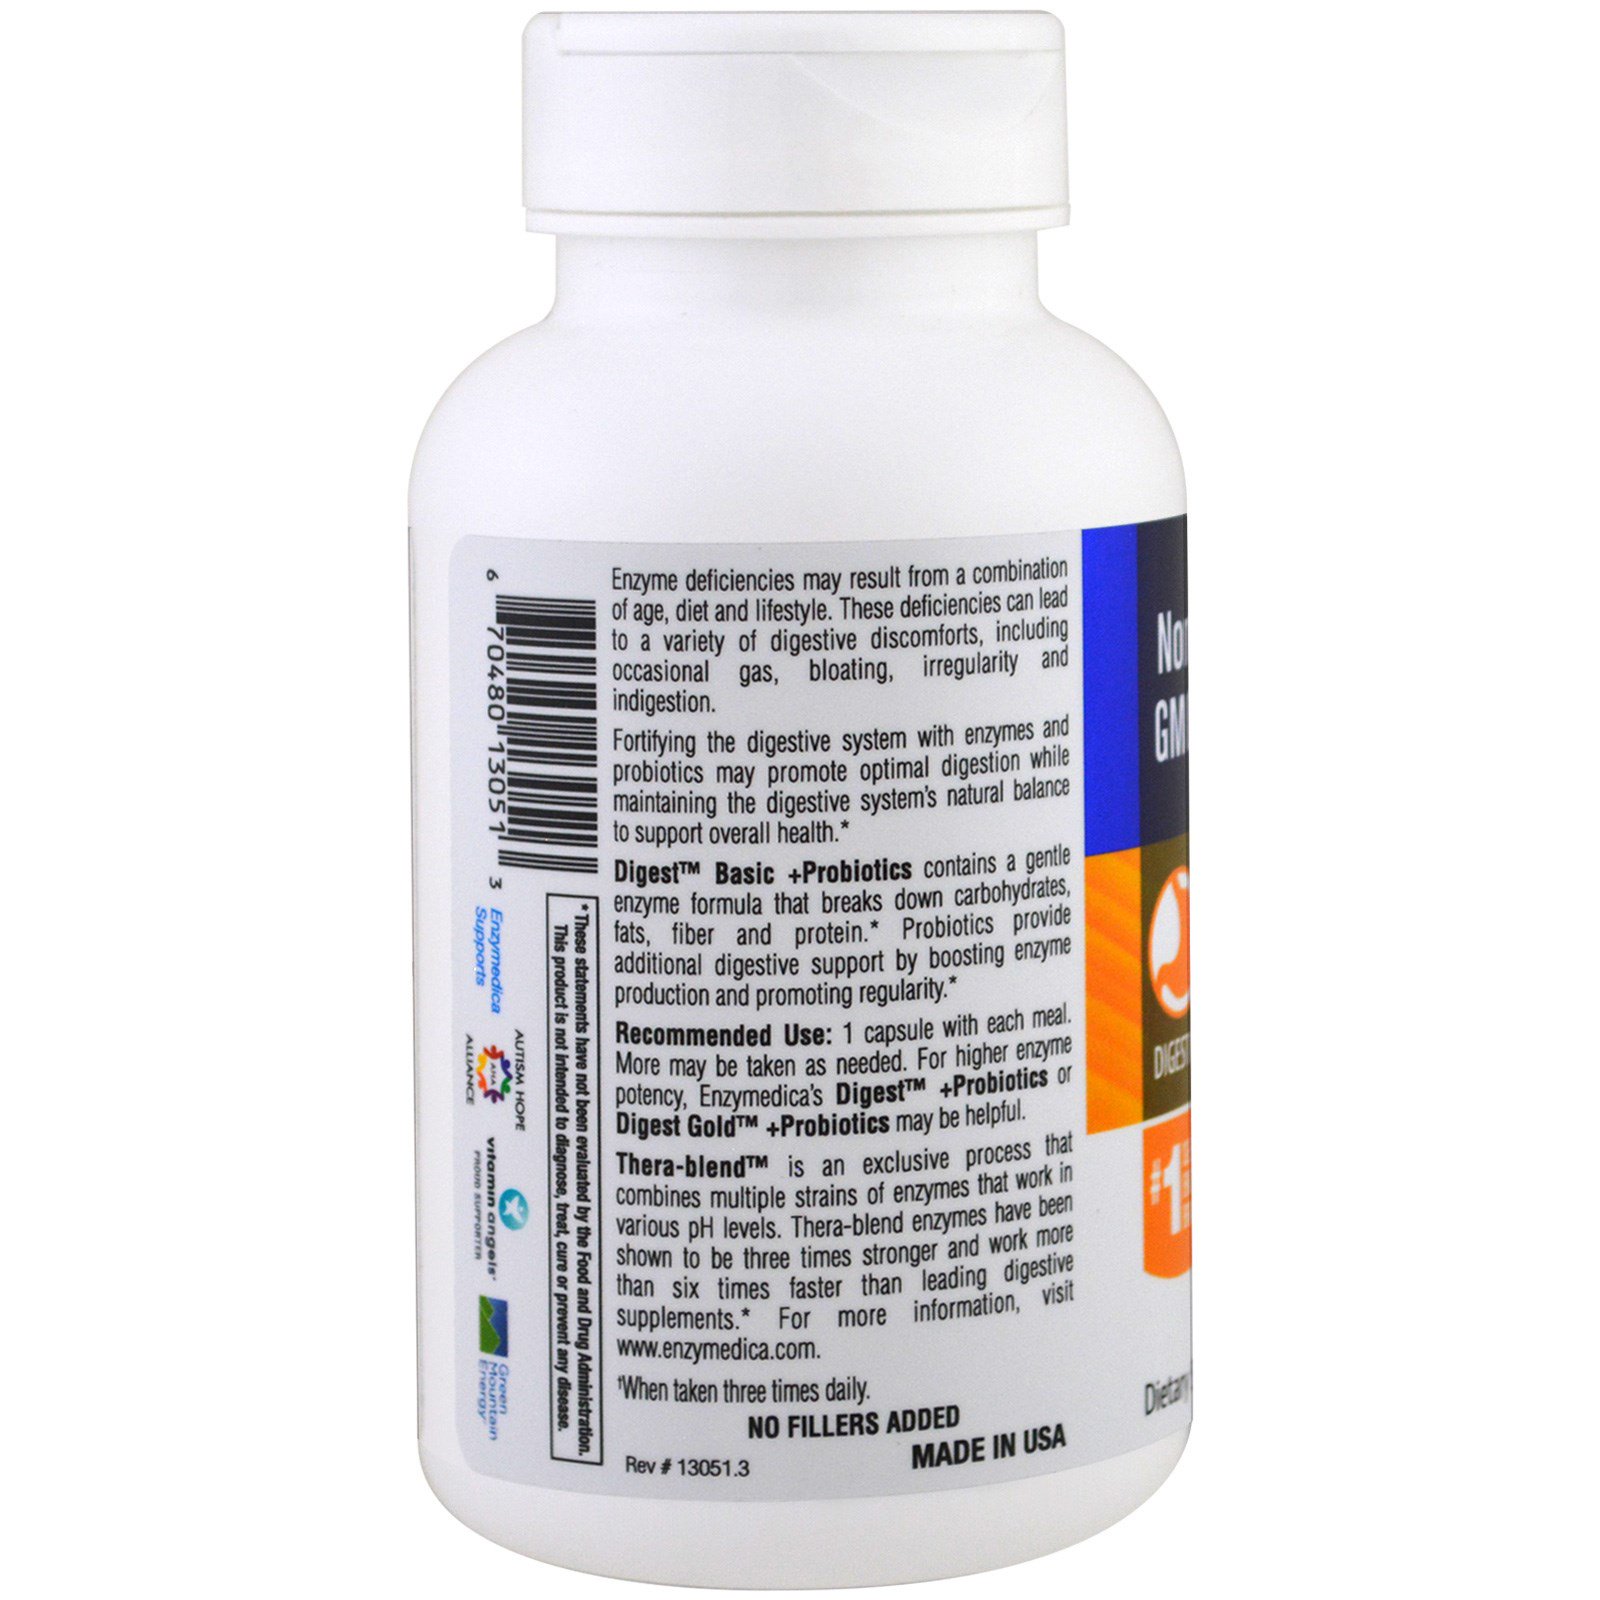 Enzymedica, Digest Basic + Probiotics, 90 Capsules